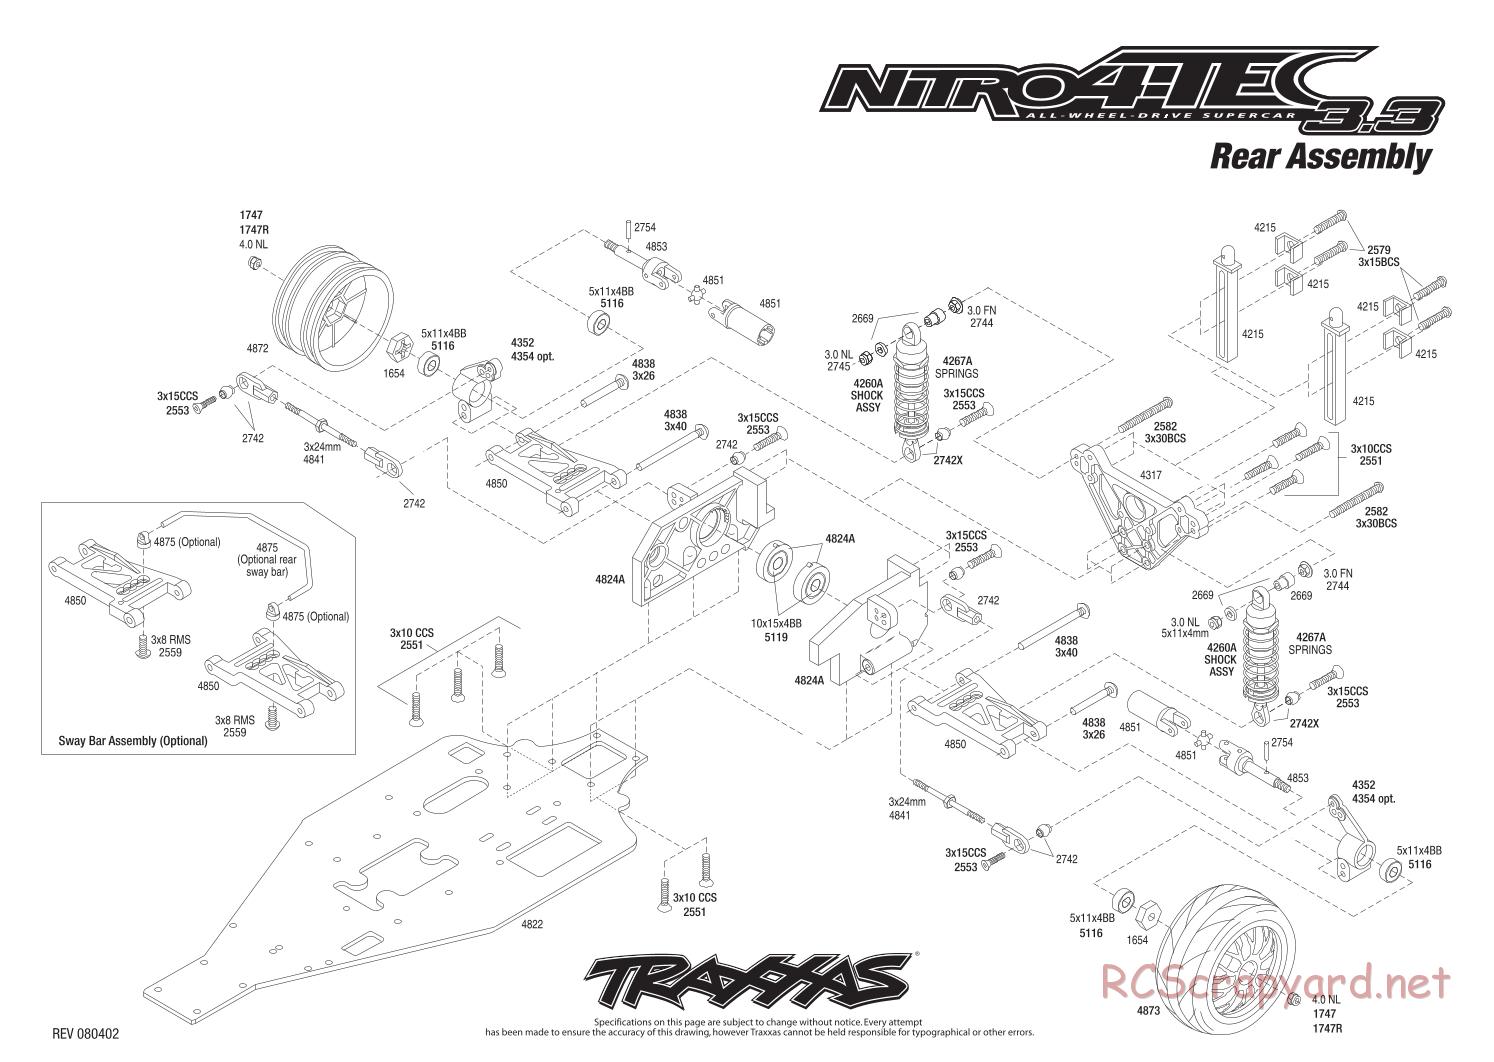 Traxxas - Nitro 4-Tec 3.3 (2006) - Exploded Views - Page 3